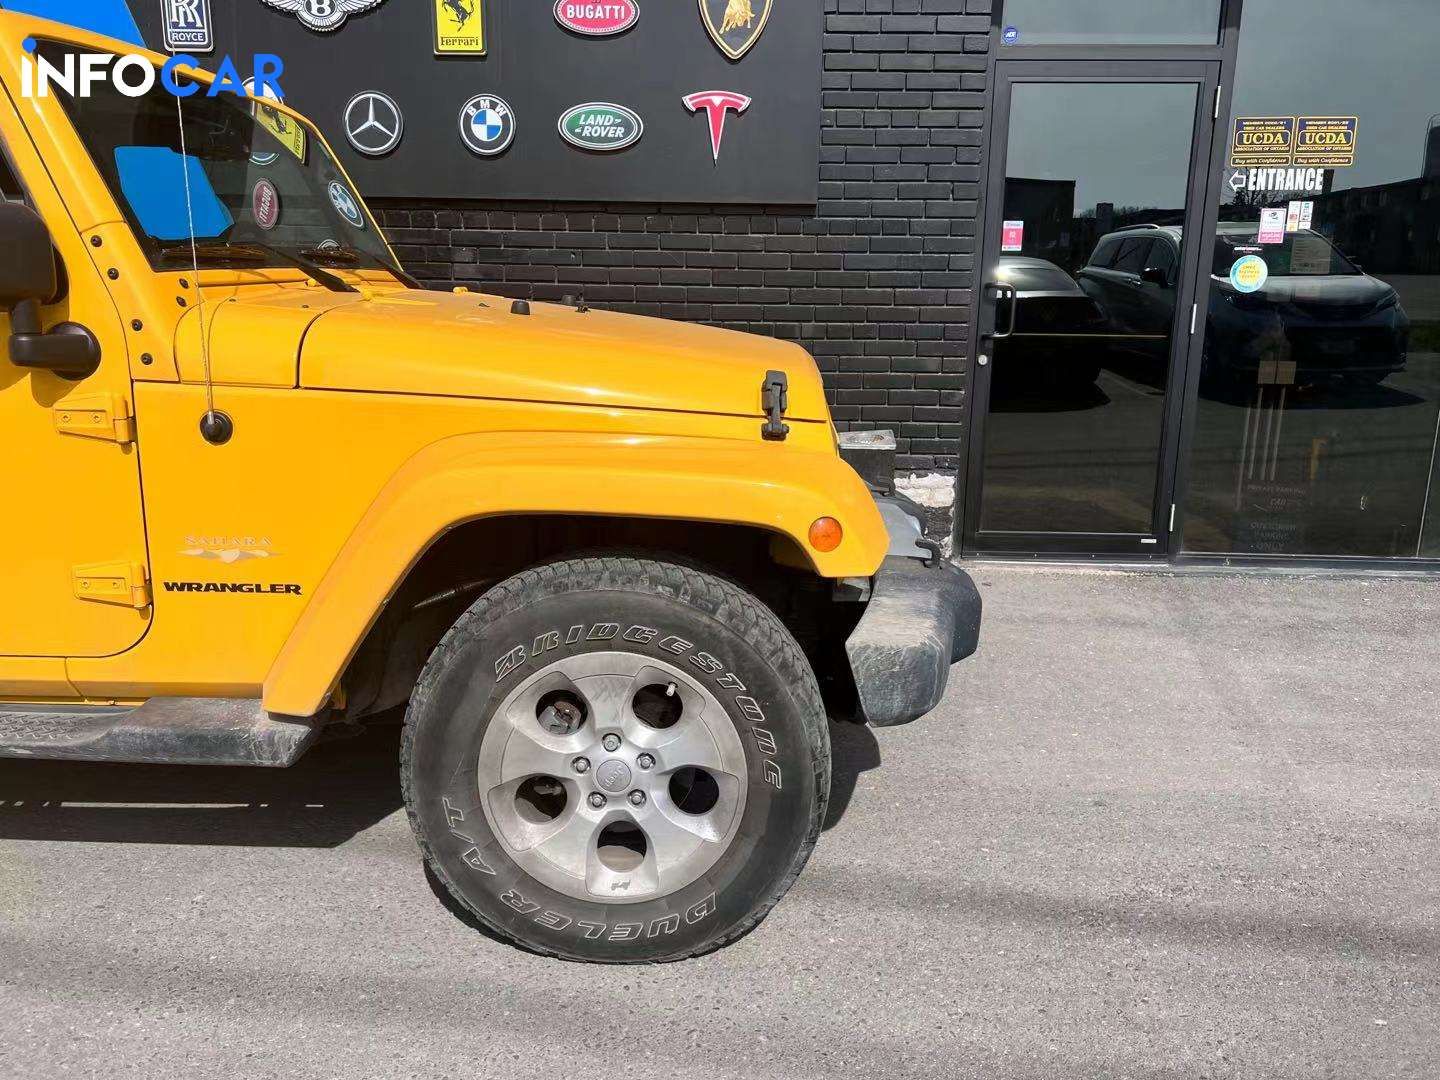 2015 Jeep Wrangler null - INFOCAR - Toronto Auto Trading Platform